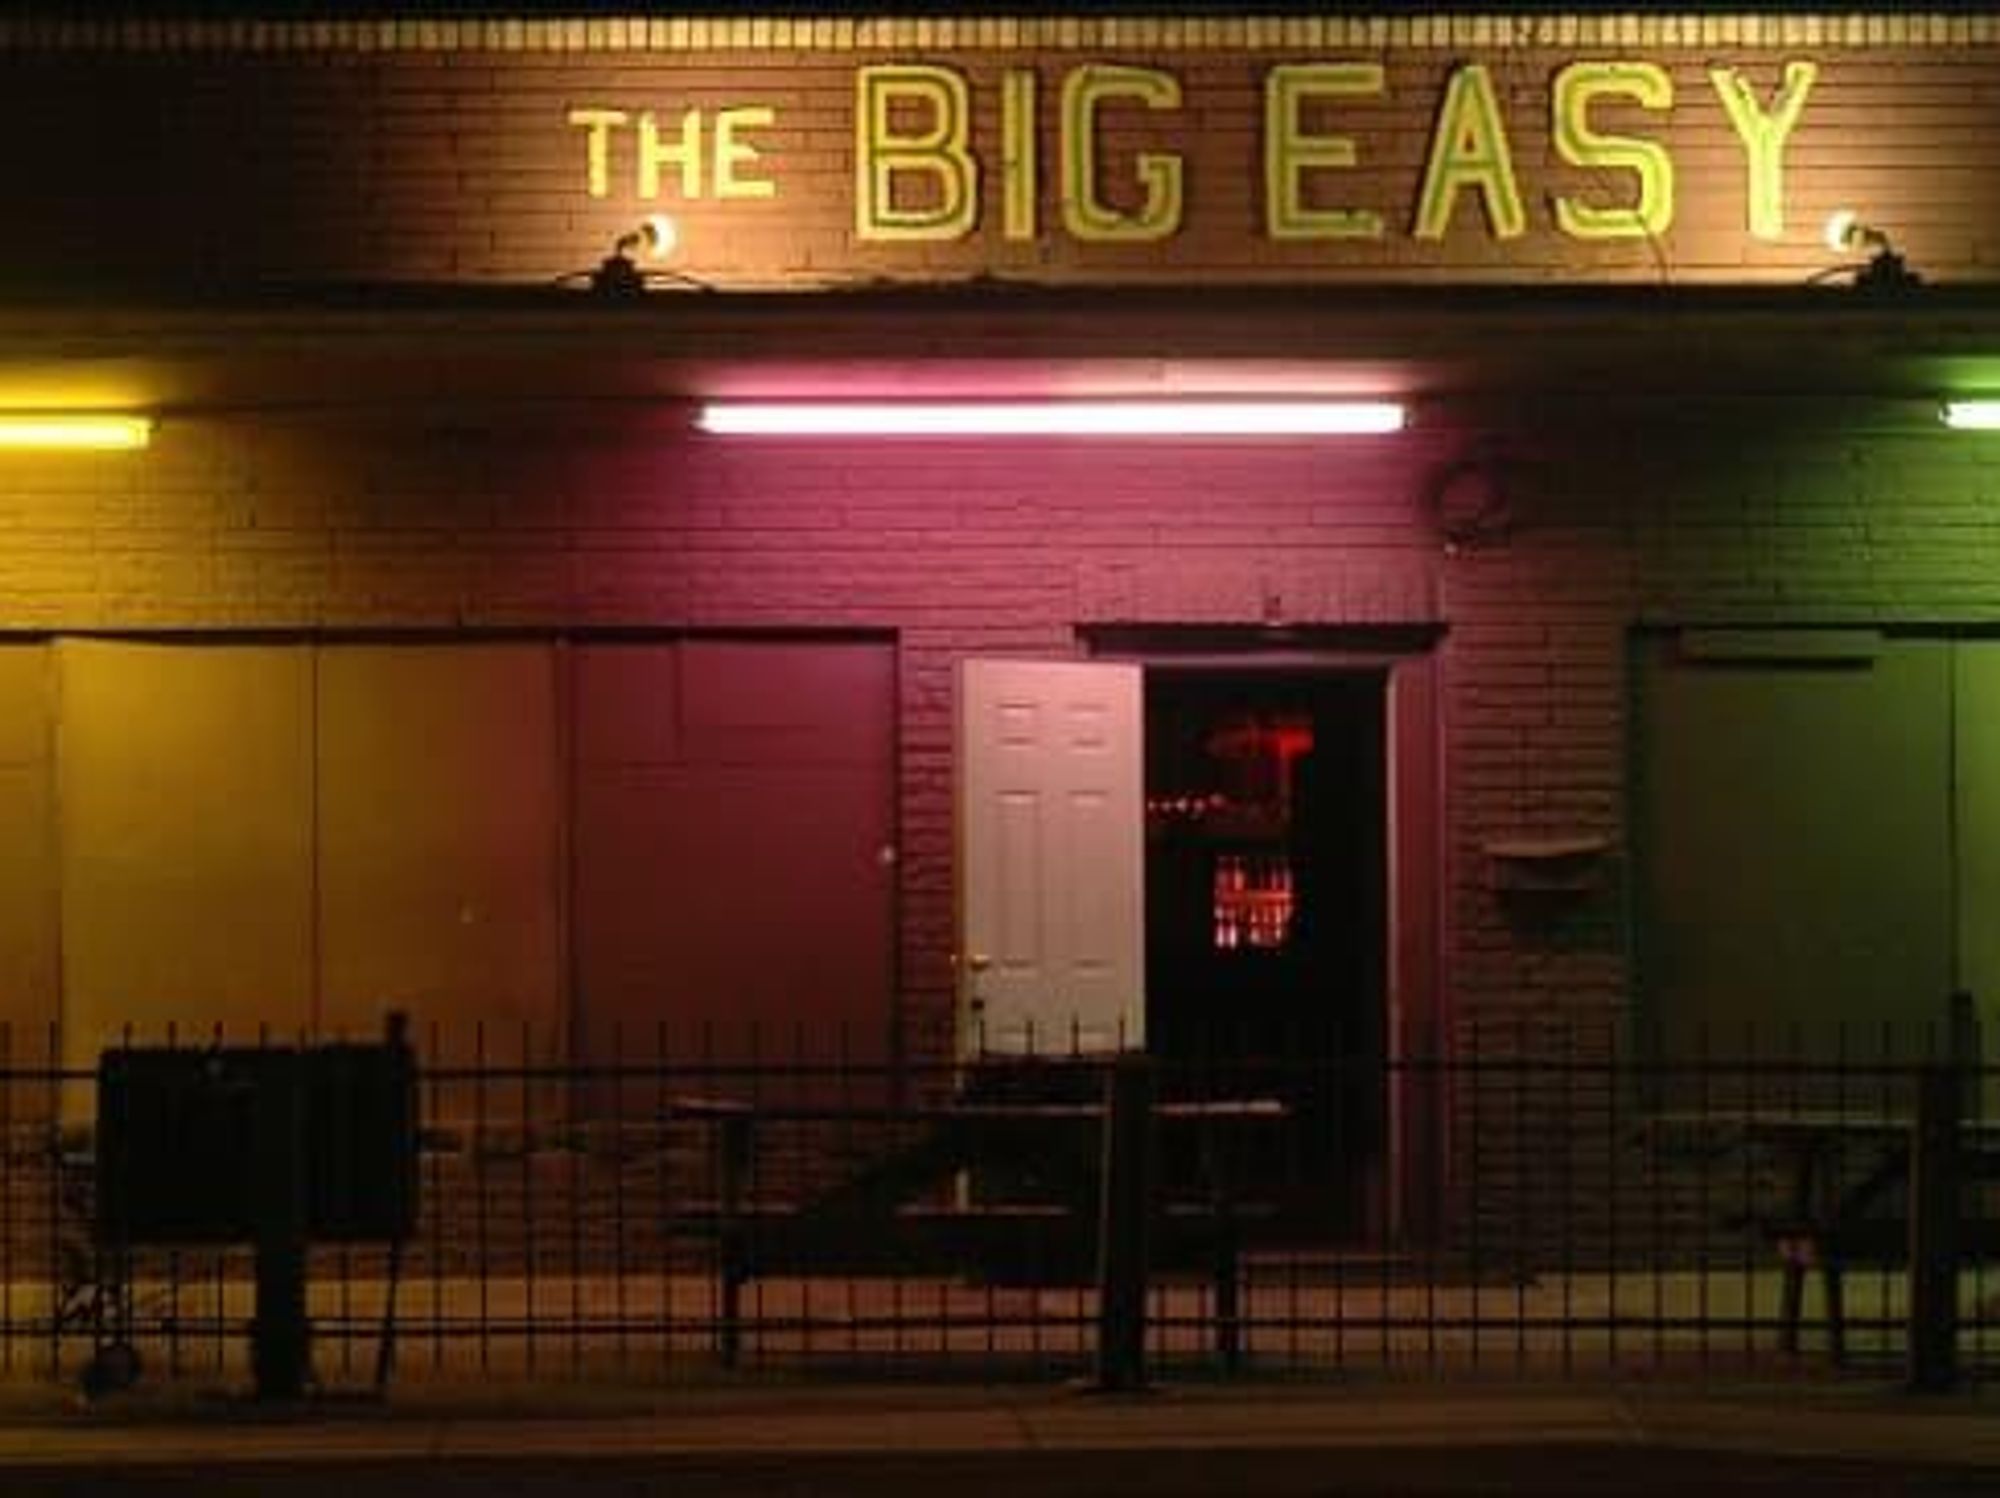 The Big Easy blues club exterior